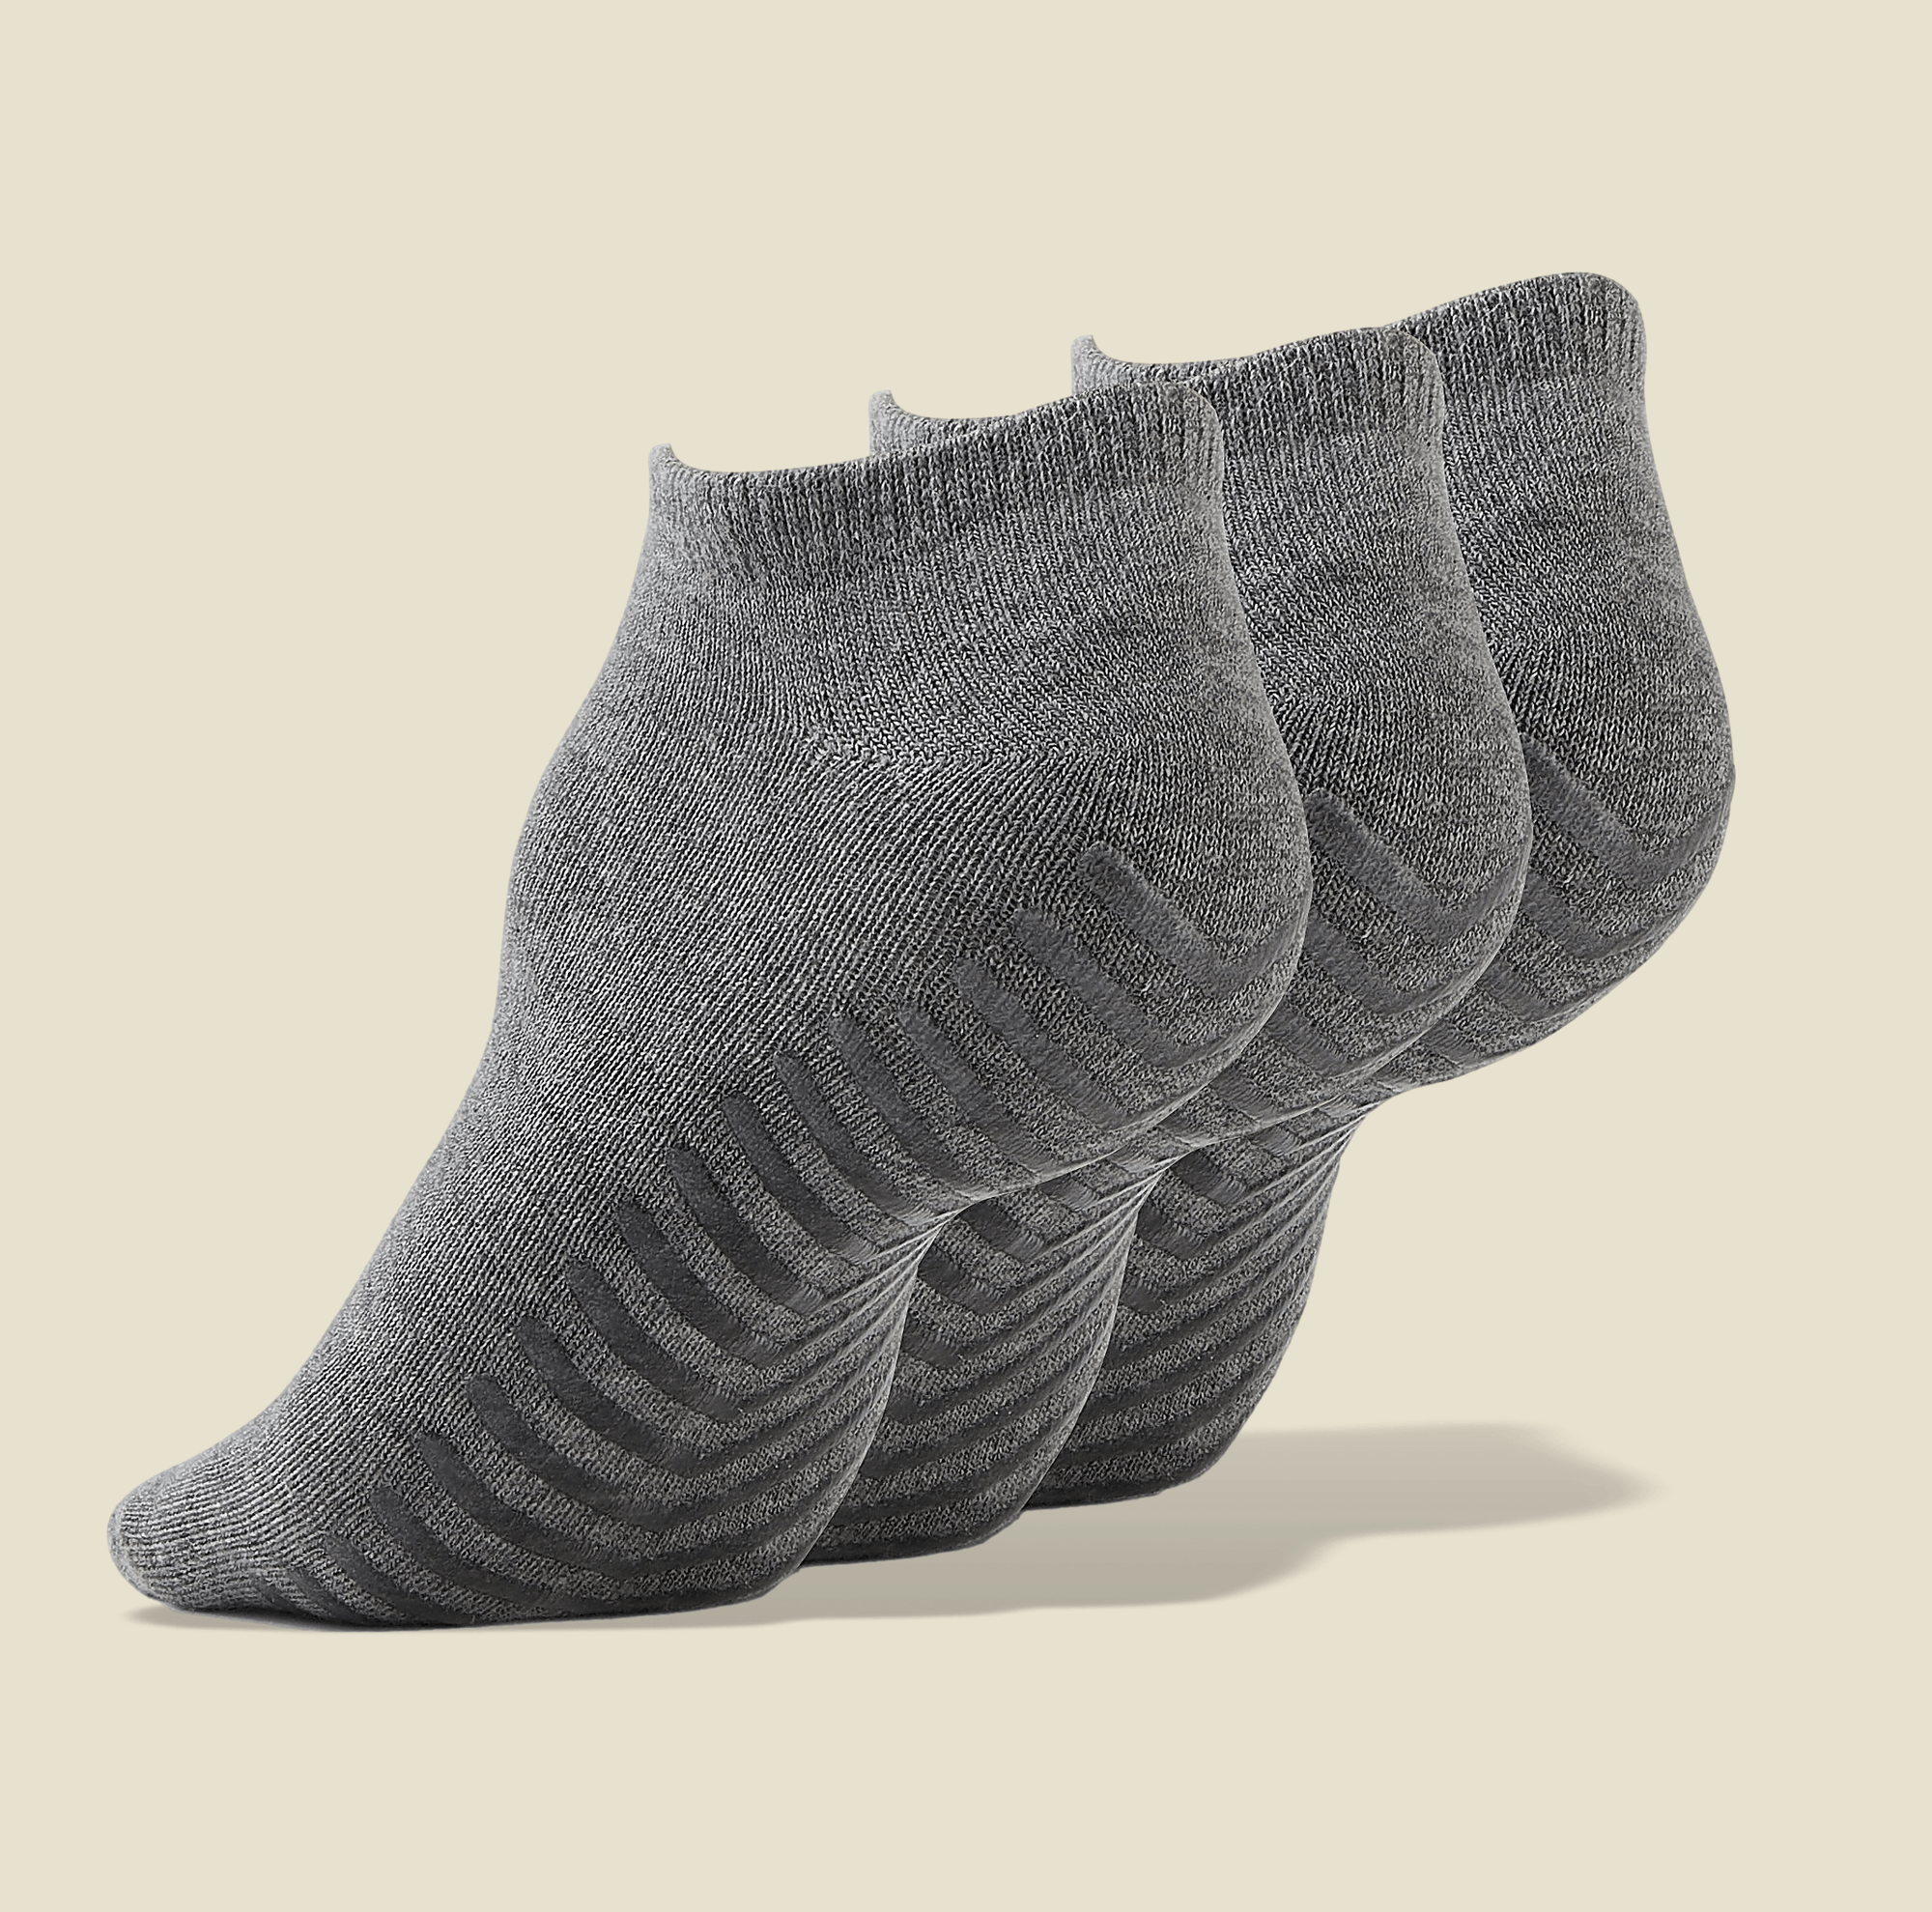 Light Grey Women's Low Cut Ankle Non Skid Socks - 3 pairs - Gripjoy Socks